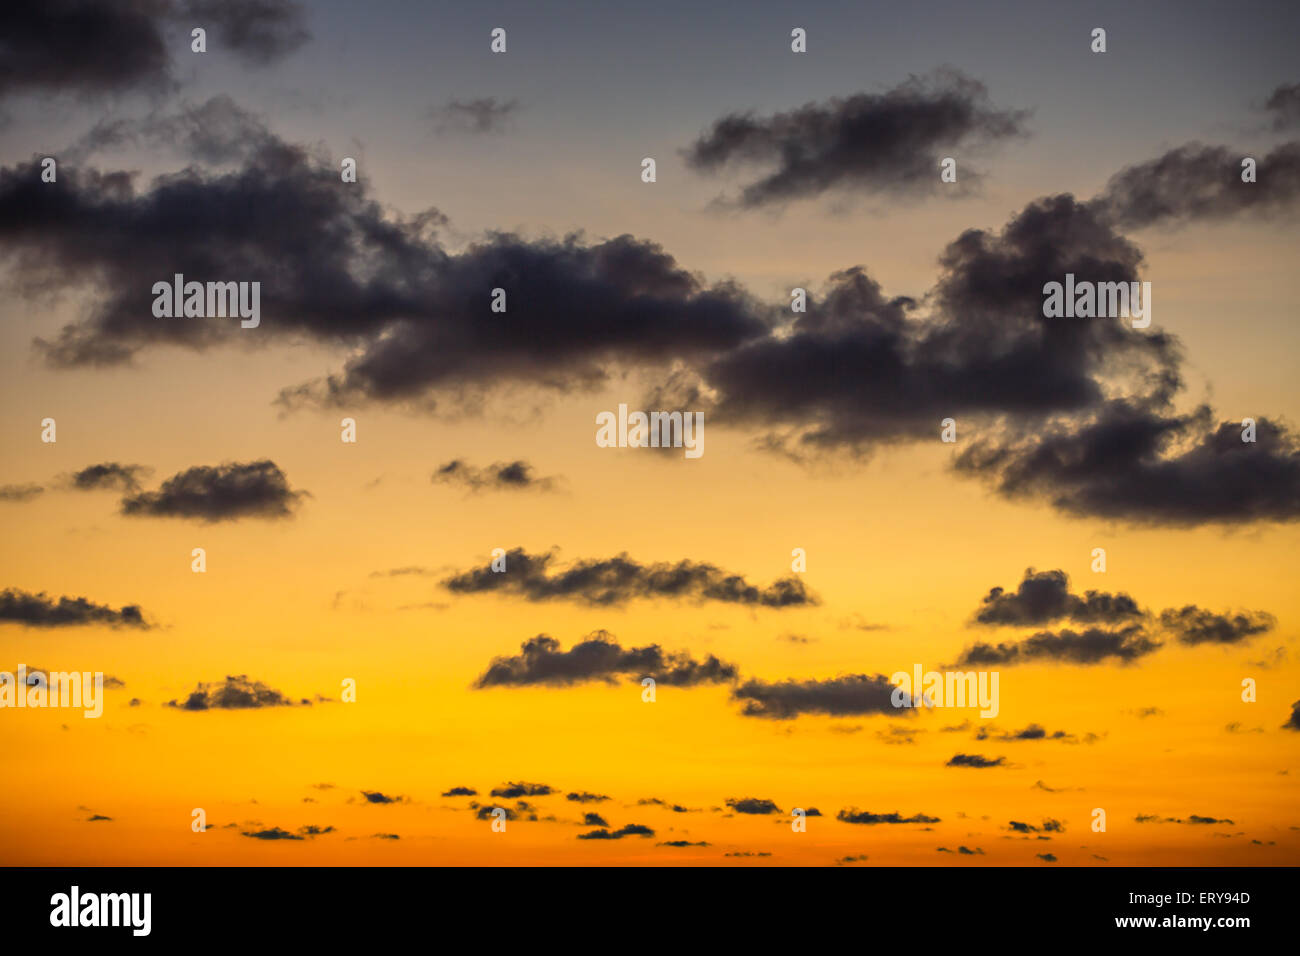 Sunset / sunrise beautiful sky with clouds Stock Photo